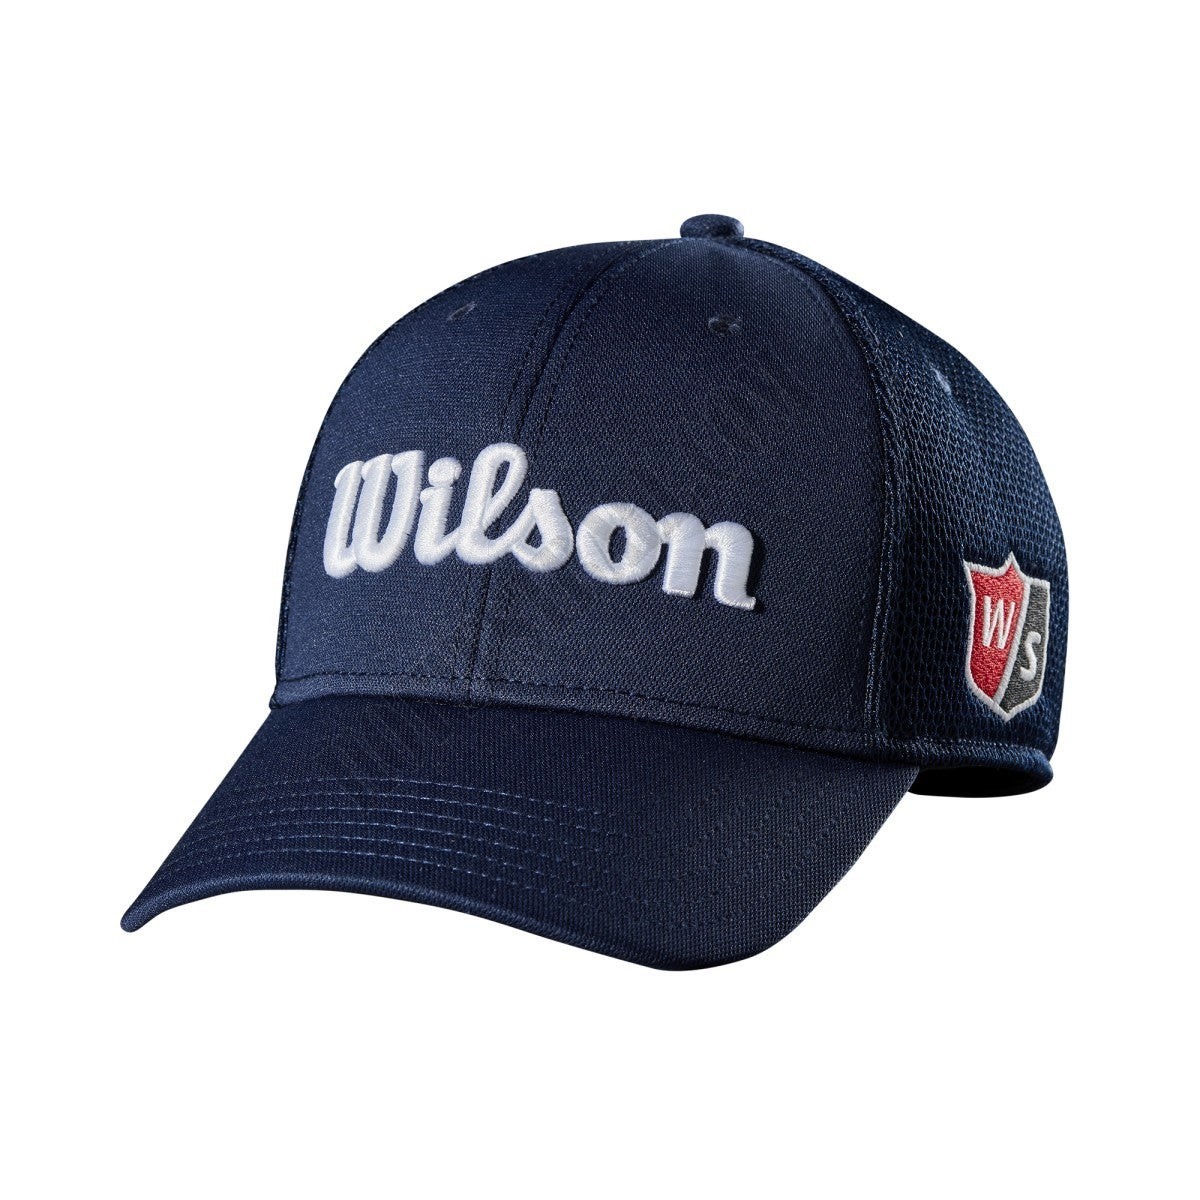 Wilson Tour Mesh Hat - Wilson Discount Store - Wilson Tour Mesh Hat - Wilson Discount Store